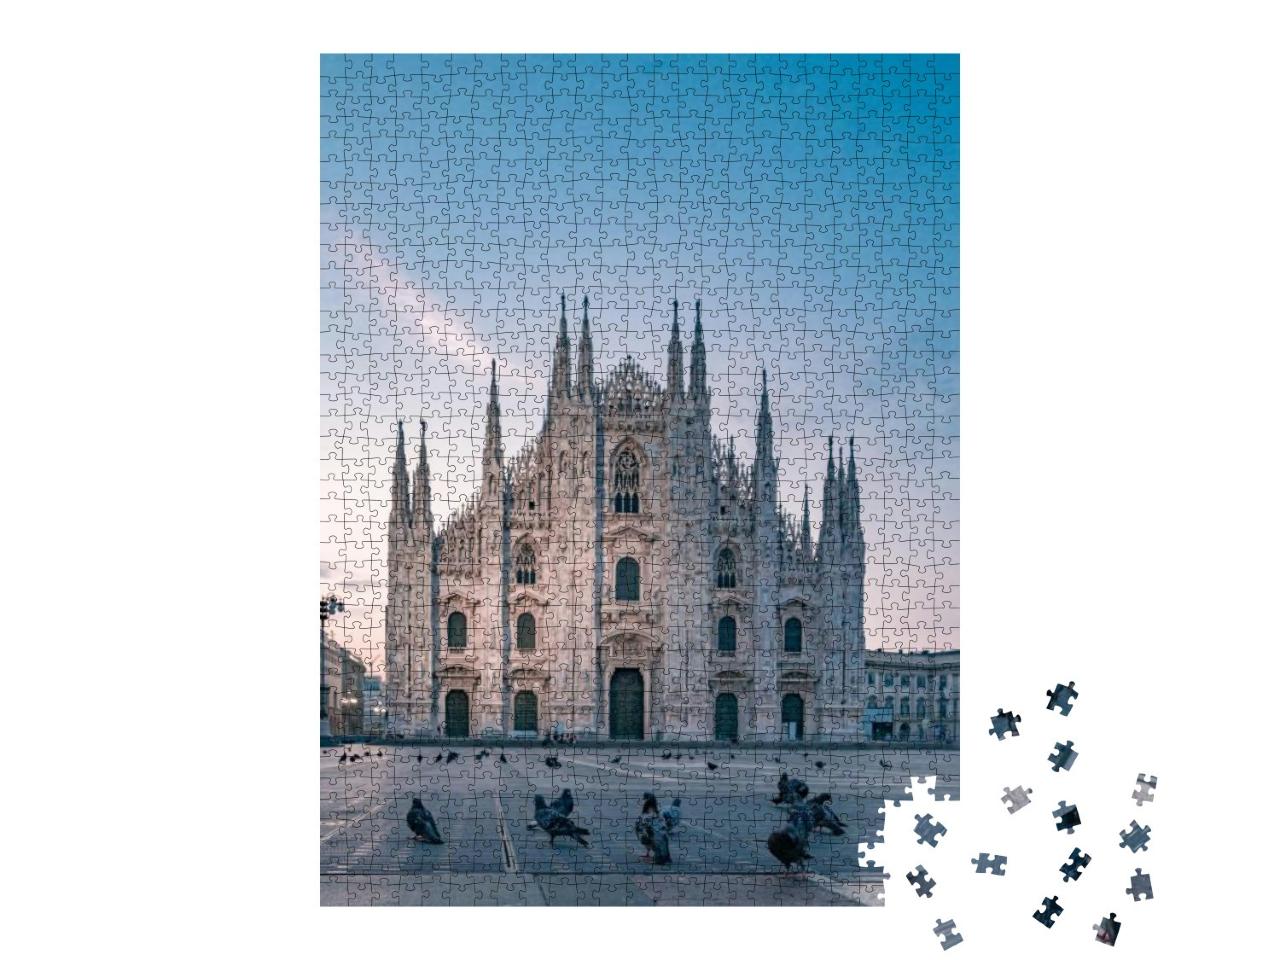 Duomo Di Milano Milan Cathedral in Milan, Italy. Milan Ca... Jigsaw Puzzle with 1000 pieces